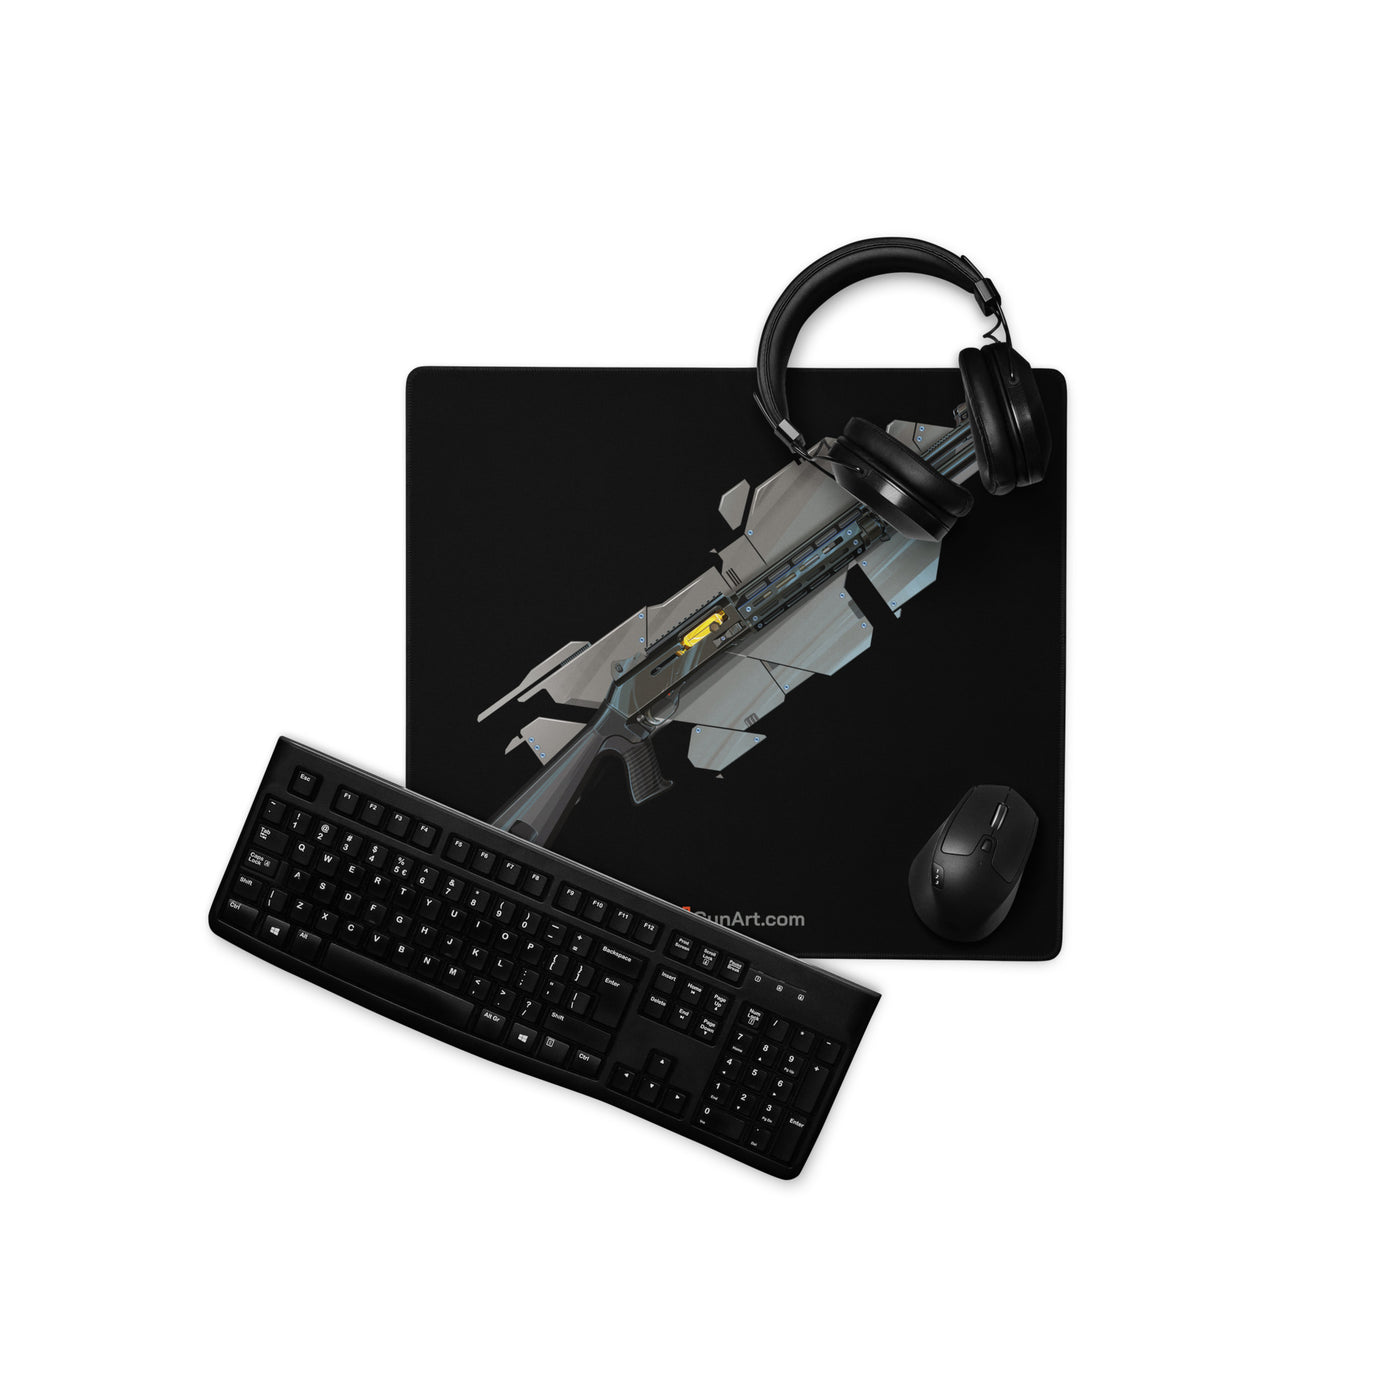 Special Ops Shotgun 12 Gauge Gaming Mouse Pad - Black Background